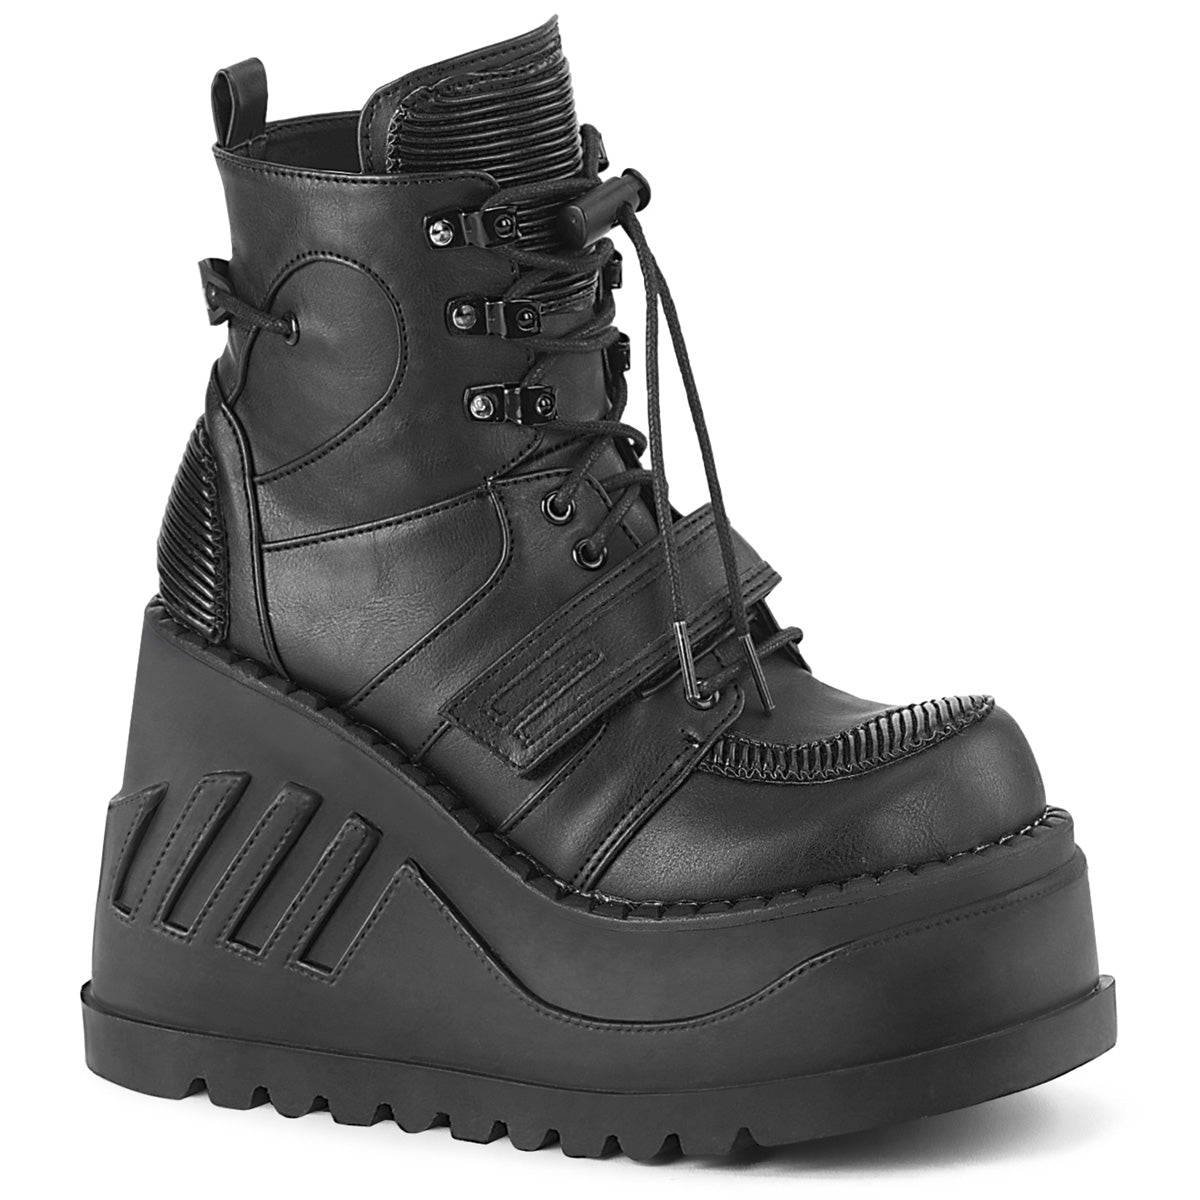 STOMP-13 Black Vegan Leather Ankle Boot Demonia